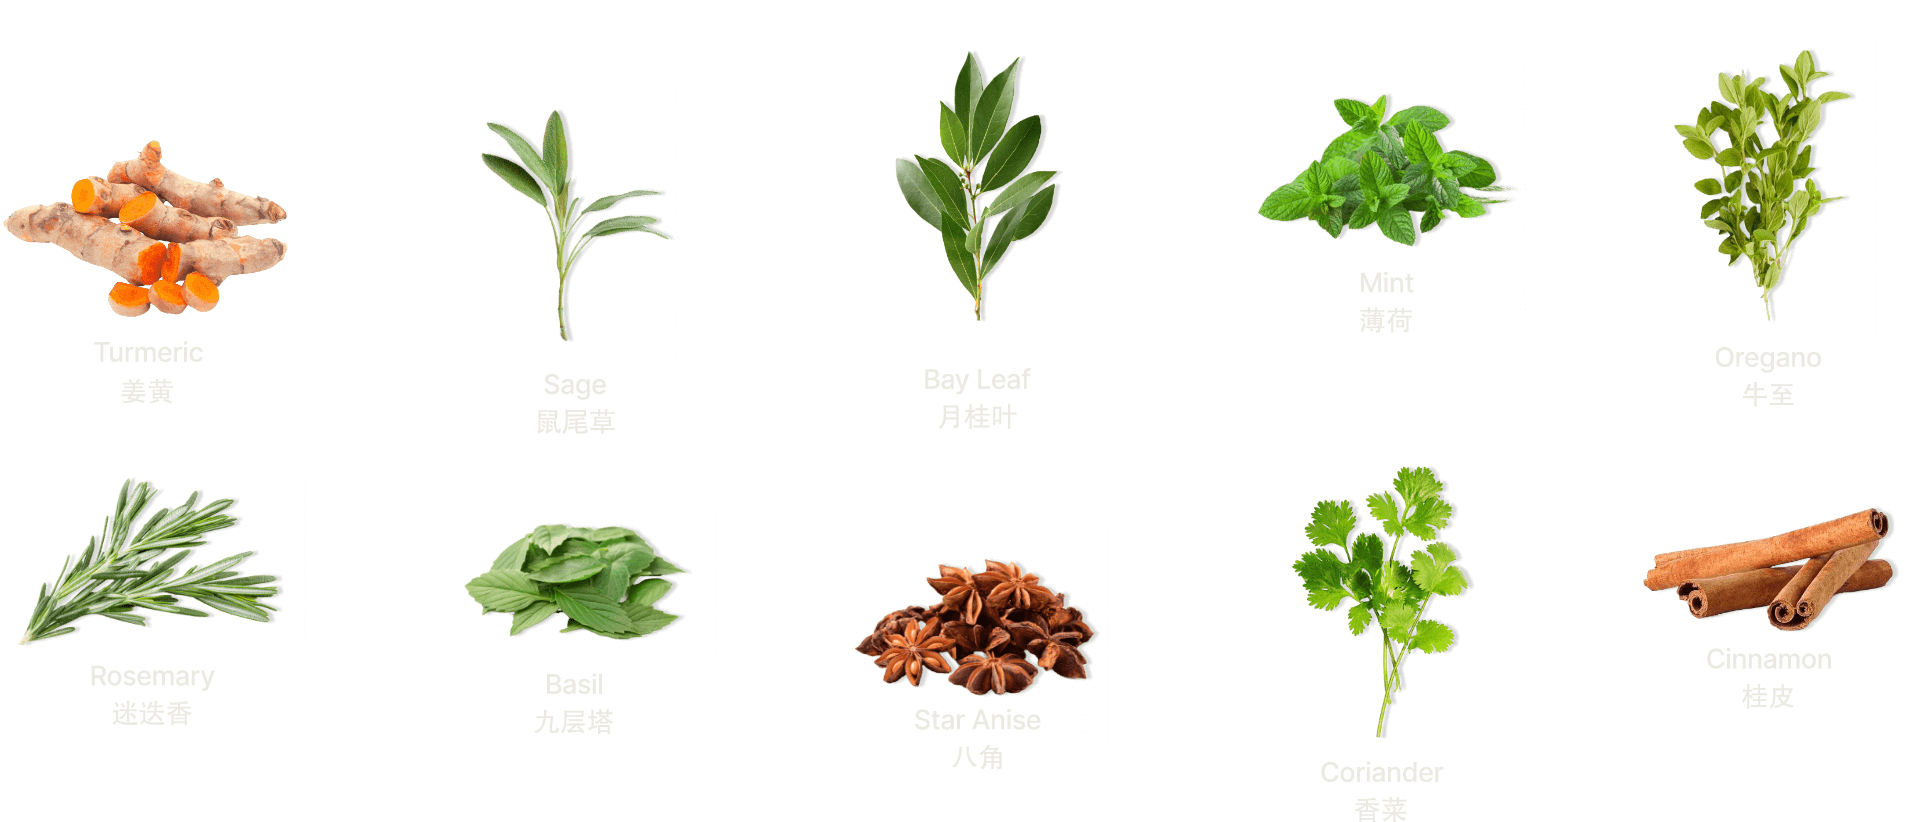 LP-herbs-01